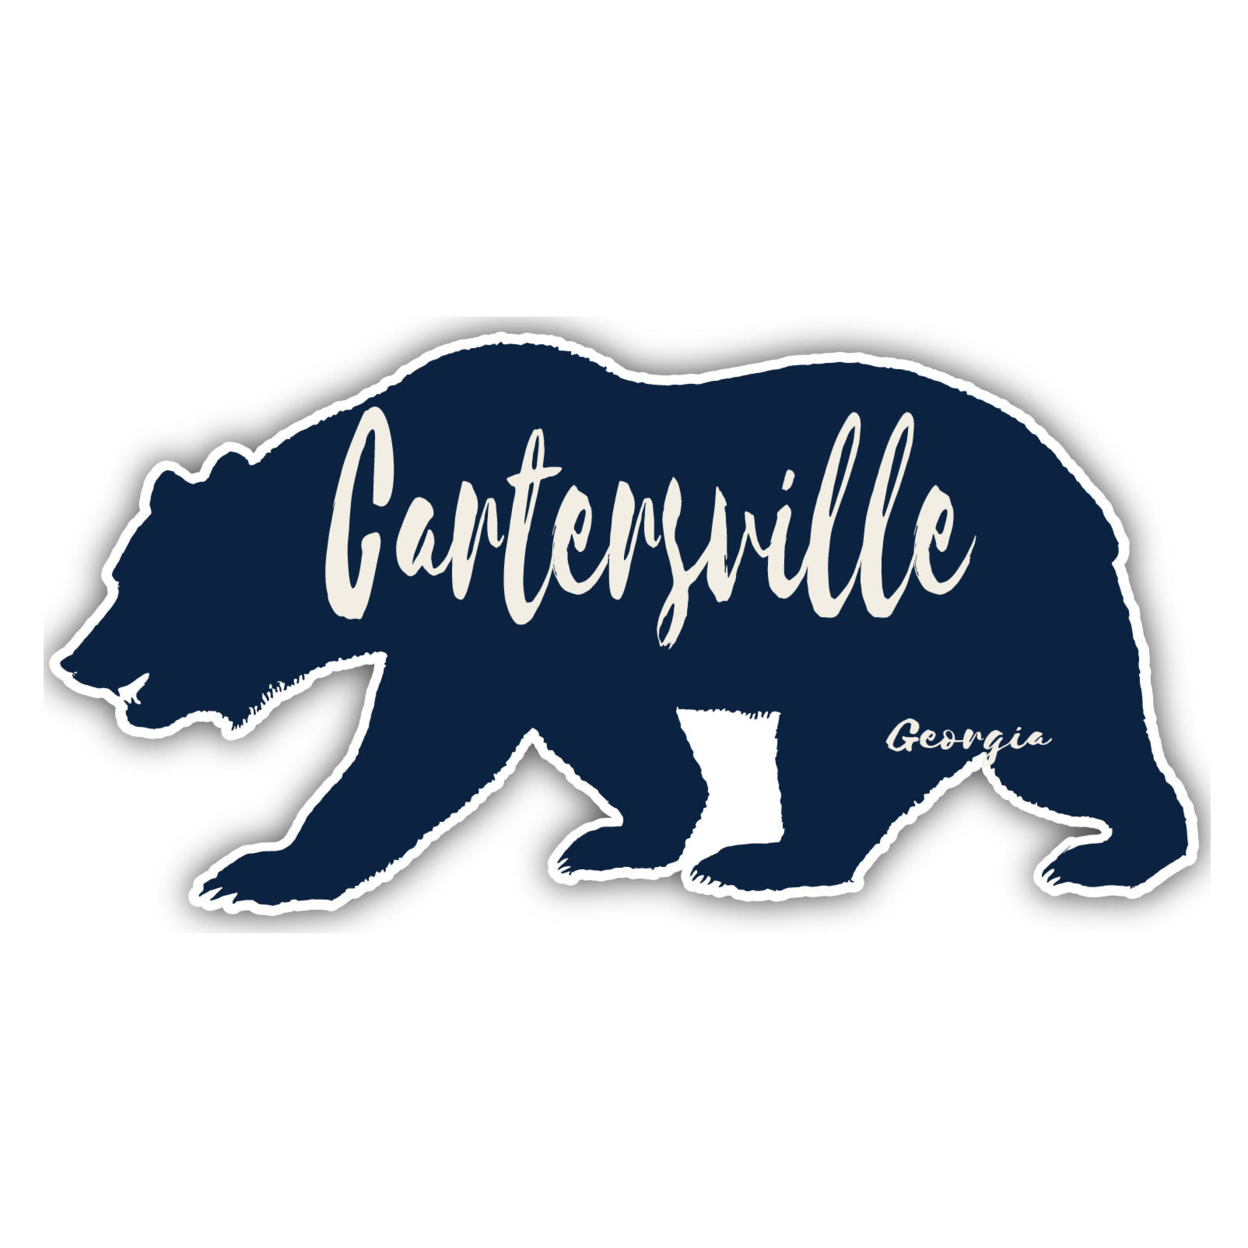 Cartersville Georgia Souvenir Decorative Stickers (Choose Theme And Size) - 4-Pack, 4-Inch, Bear